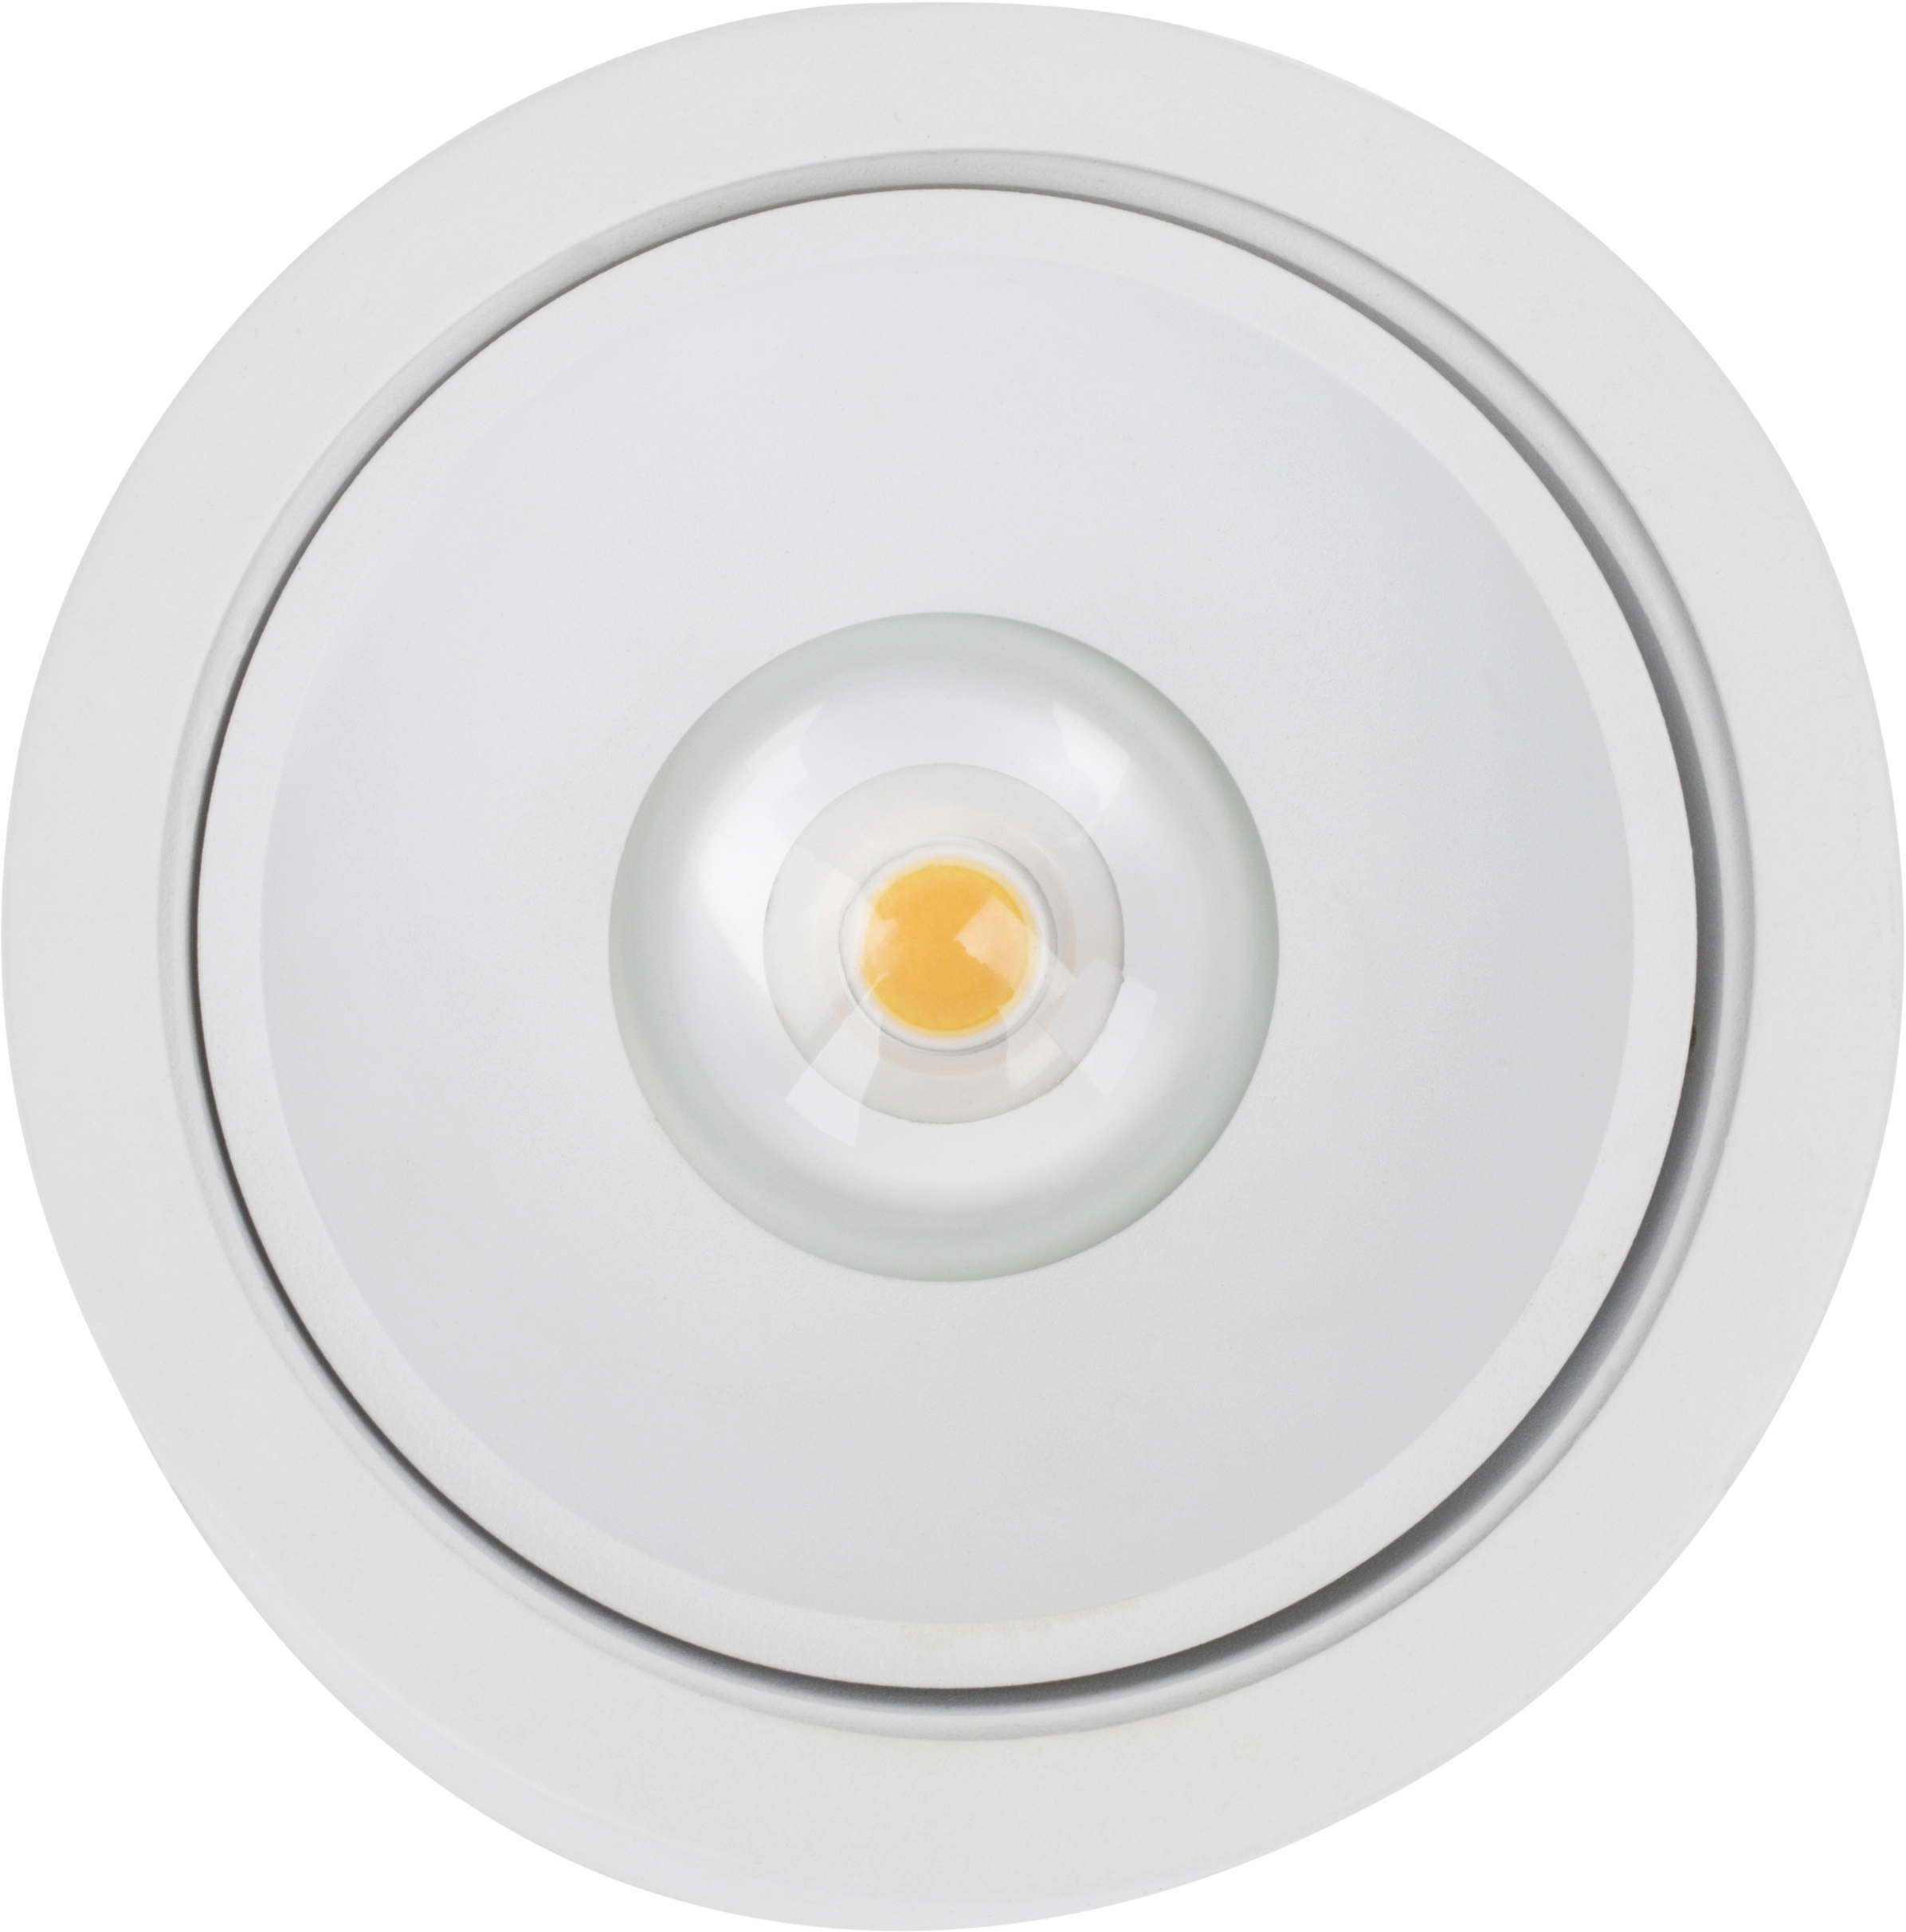 AEG LED-Spot Leca dimmbar und cm cm 12,8 9 Ø OBI schwenkbar x kaufen bei